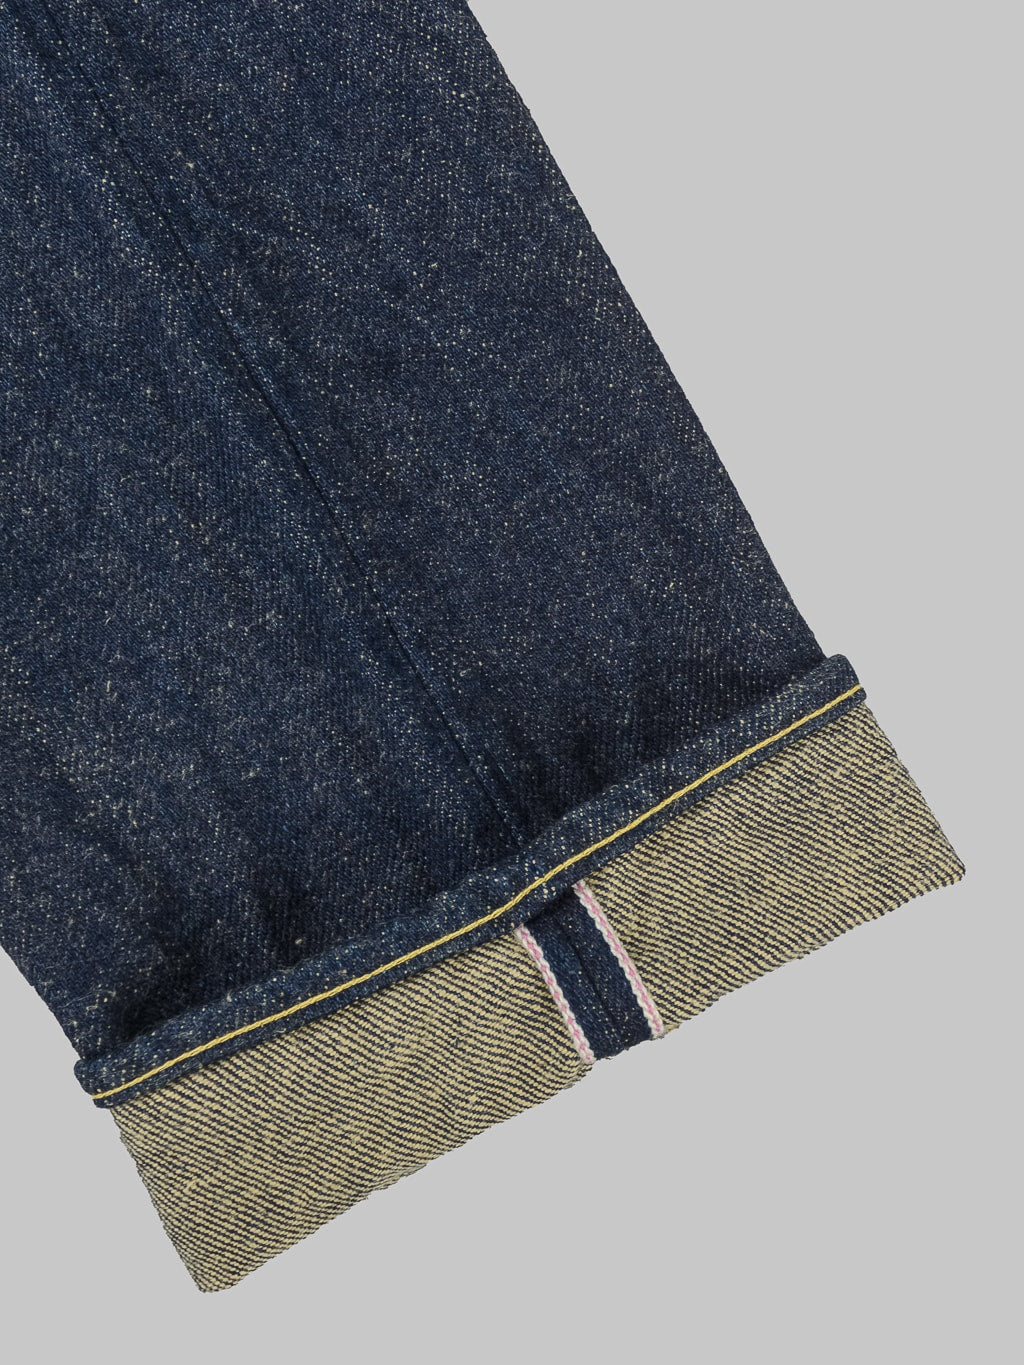 ONI Denim 288ZR Secret Denim 20oz Regular Straight Jeans selvedge